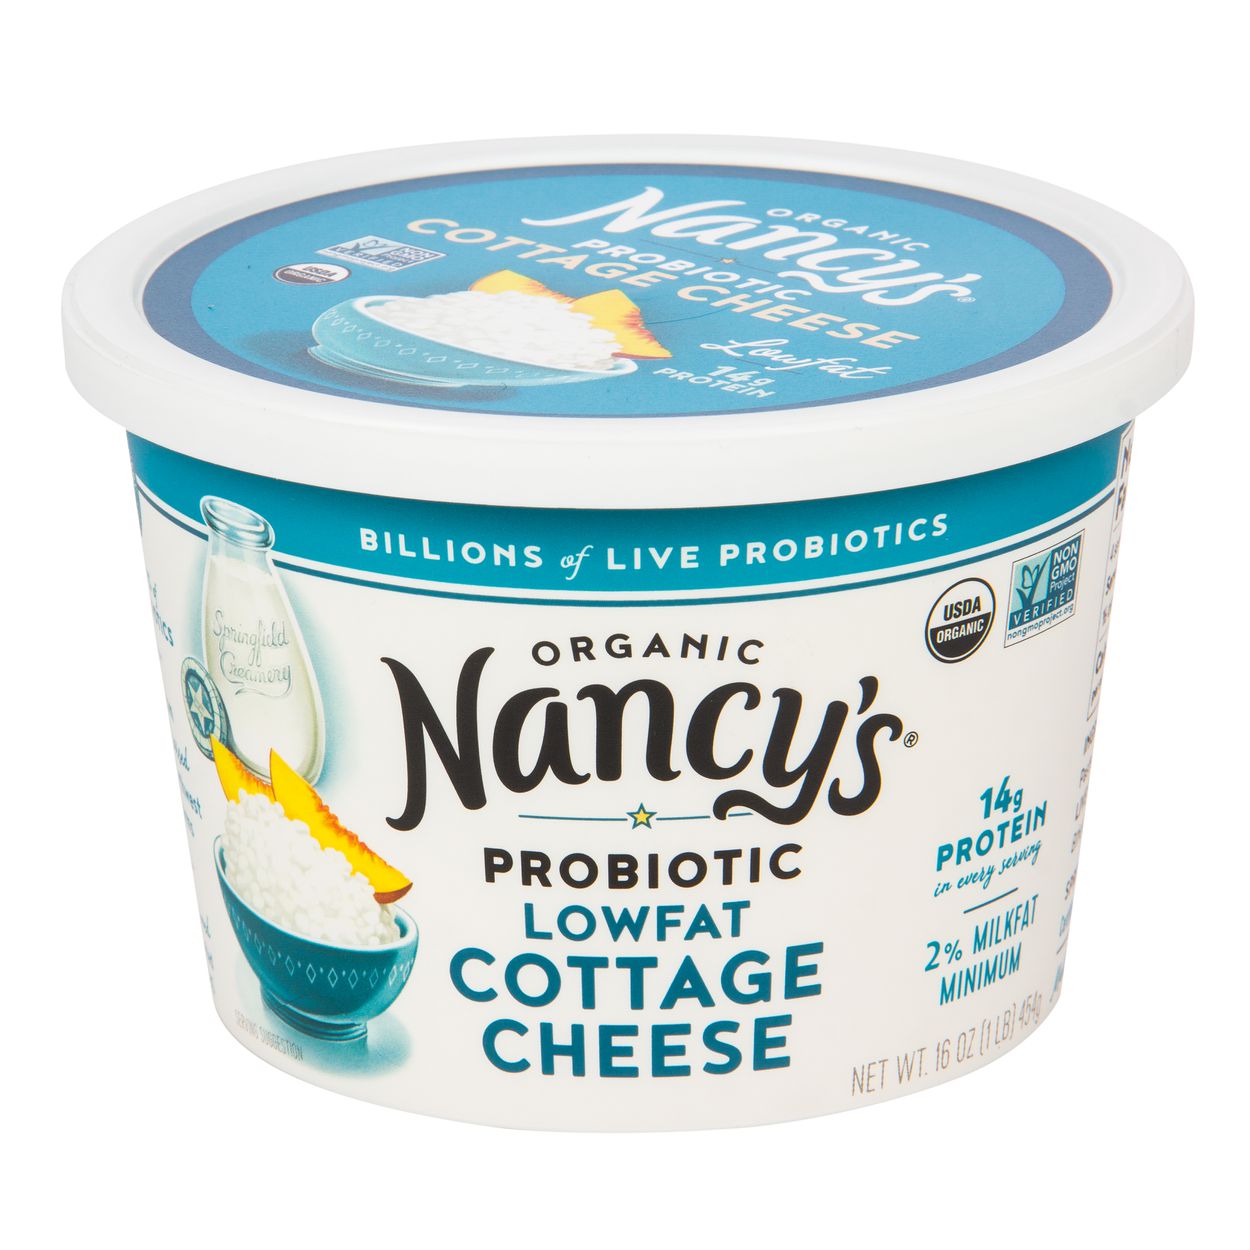 Nancy S Cottage Cheese Lowfat Organic Azure Standard